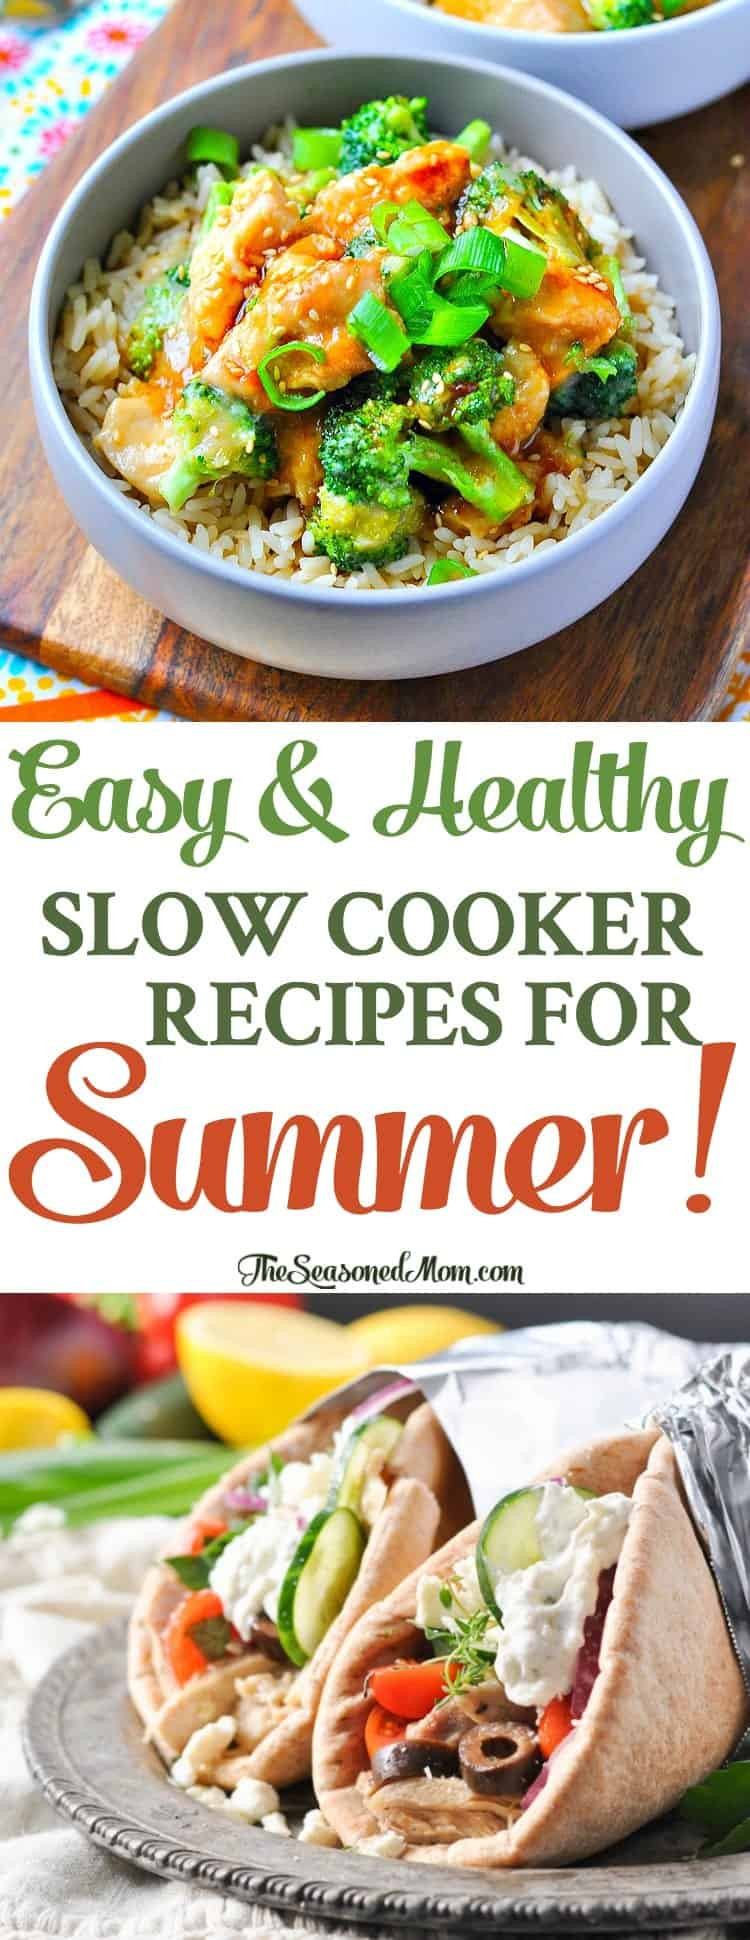 Easy Healthy Slow Cooker Recipes
 Easy Healthy Slow Cooker Recipes for Summer The